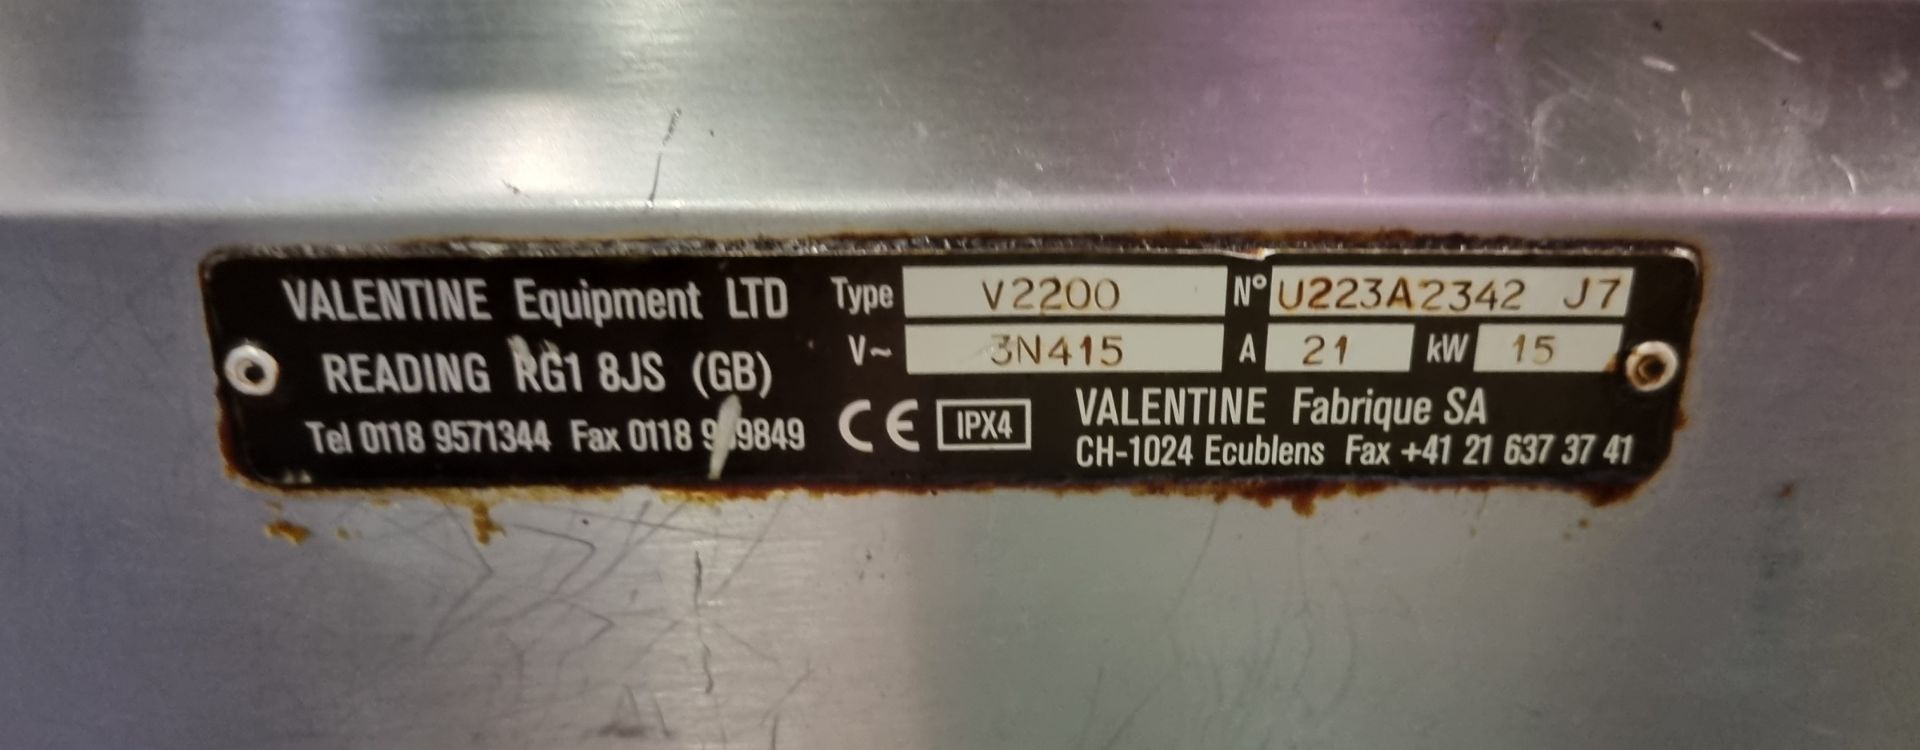 Valentine V2200 twin tank electric fryer - W 400 x D 600 x H 900mm - NO BASKETS, MISSING LIDS - Image 4 of 4